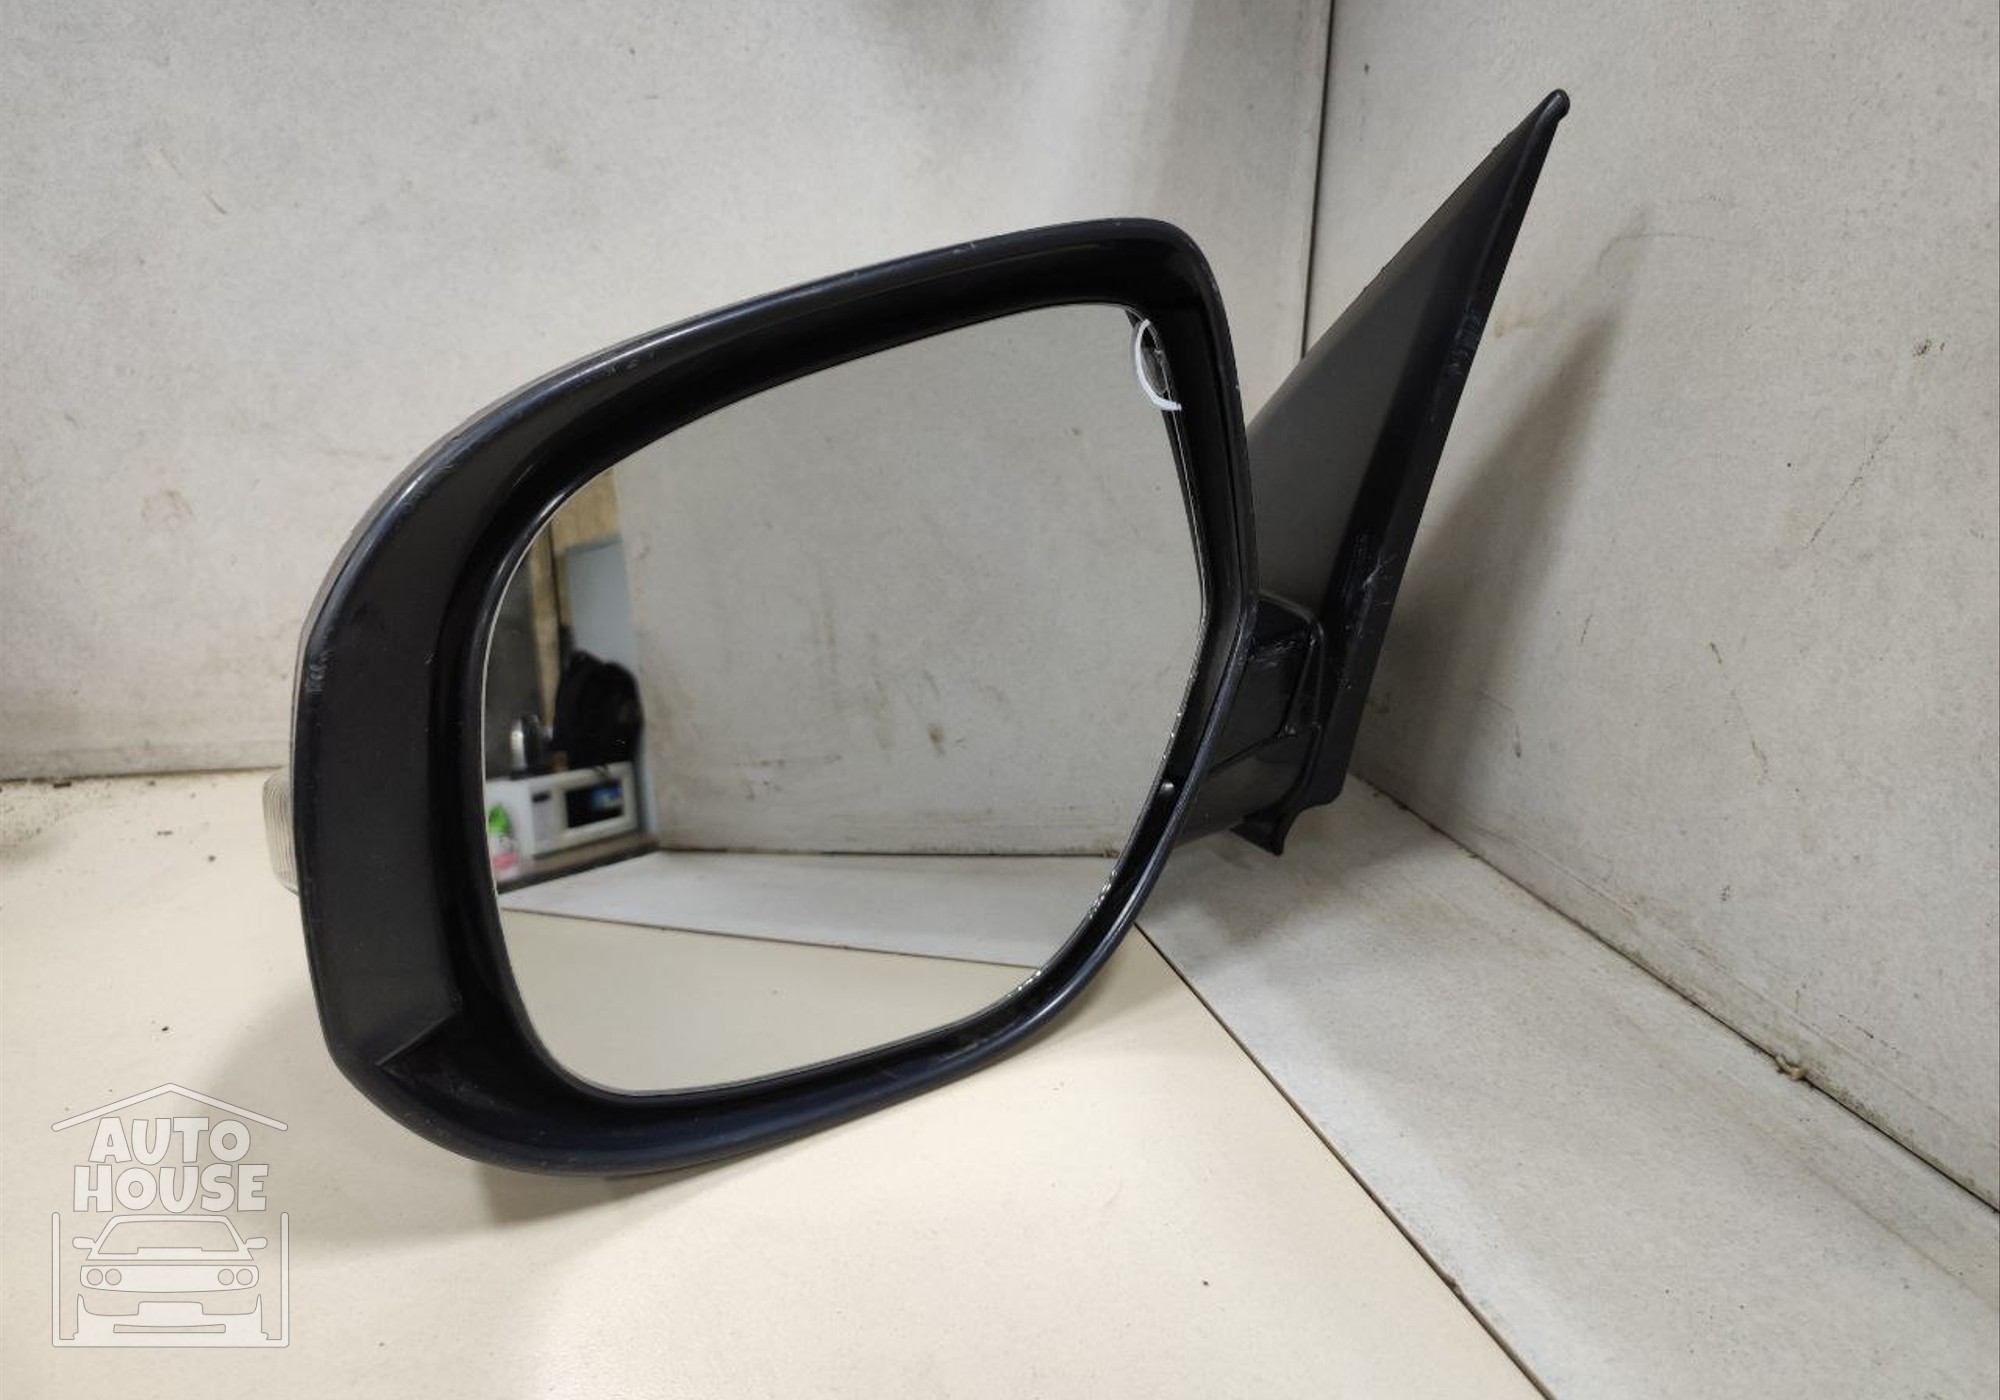 7632B347 Зеркало заднего вида боковое левое для Mitsubishi Outlander III (с 2012)